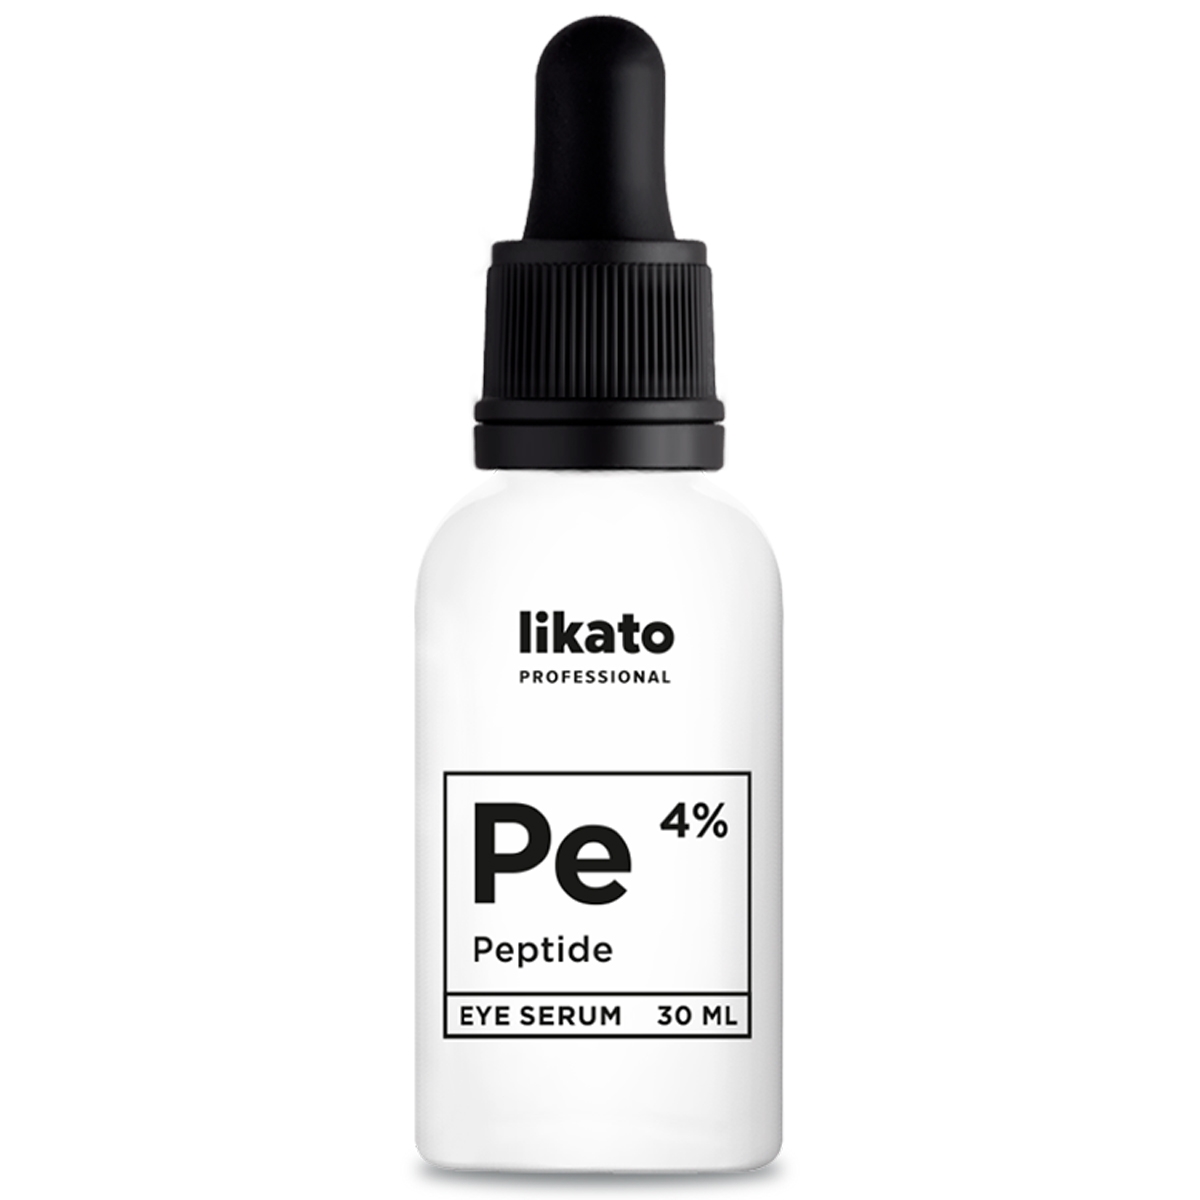 likato сыворотка для кожи вокруг глаз likato professional с пептидами 4% омолаживающая 30 мл Likato Омолаживающая сыворотка с пептидами 4% для век, 30 мл (Likato, Face)